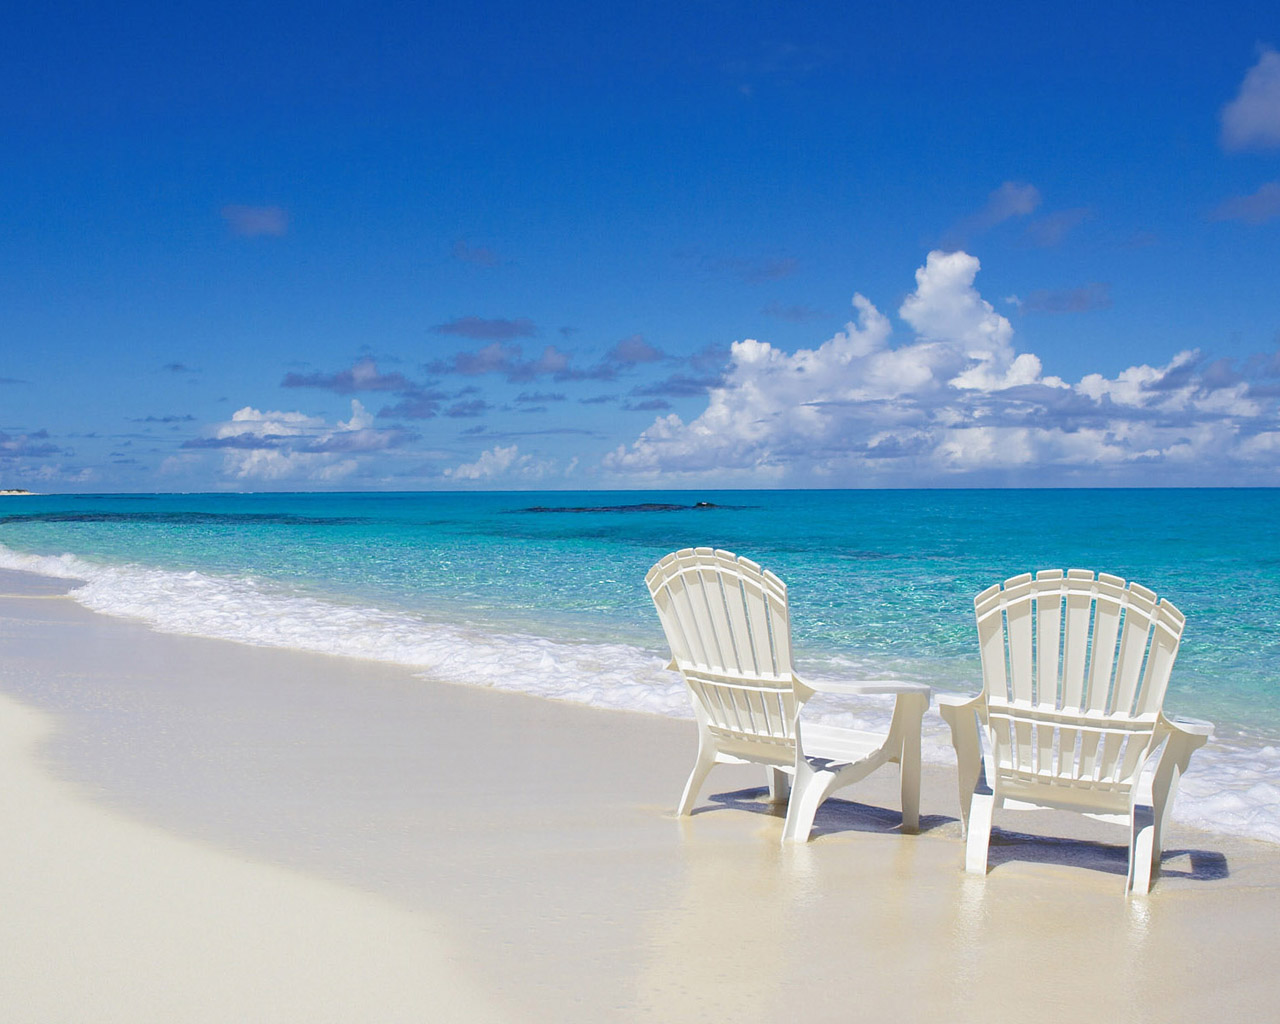 Beautiful Beach 1280x1024 WallpapersTurks and Caicos Islands 1280x1024